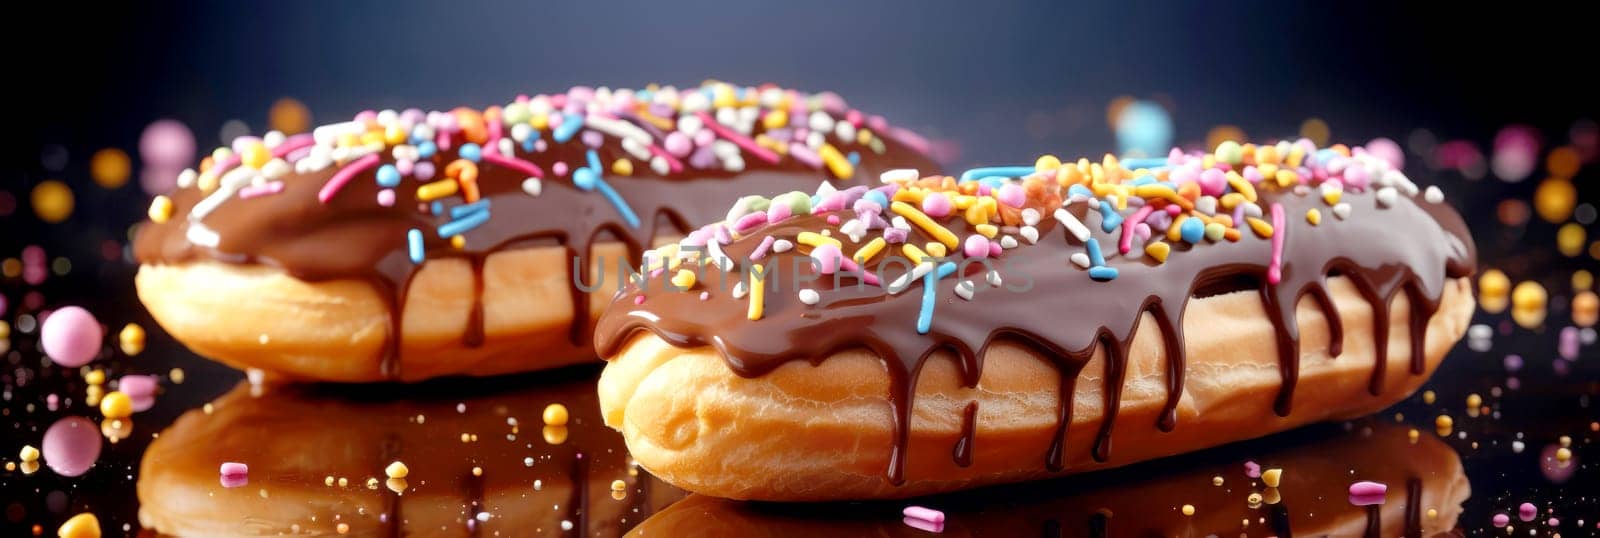 Chocolate Glazed Donuts with Sprinkles by ugguggu